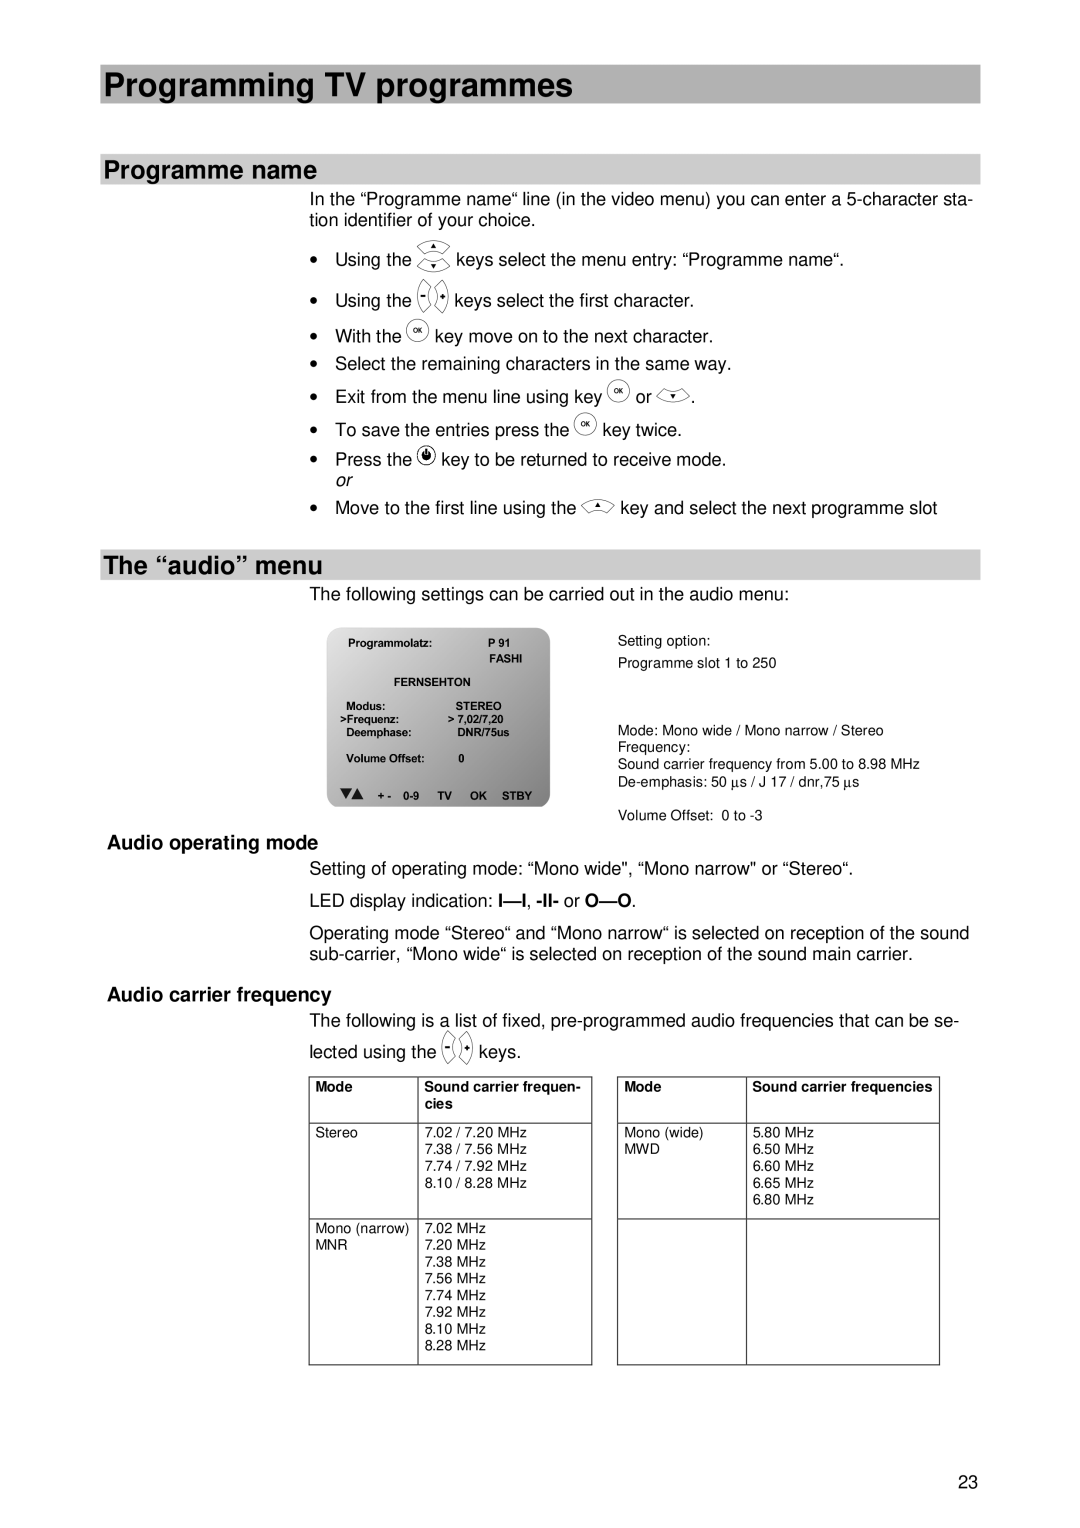 Kathrein UFD 430 manual Programme name, The “audio” menu, Programming TV programmes, Audio operating mode 